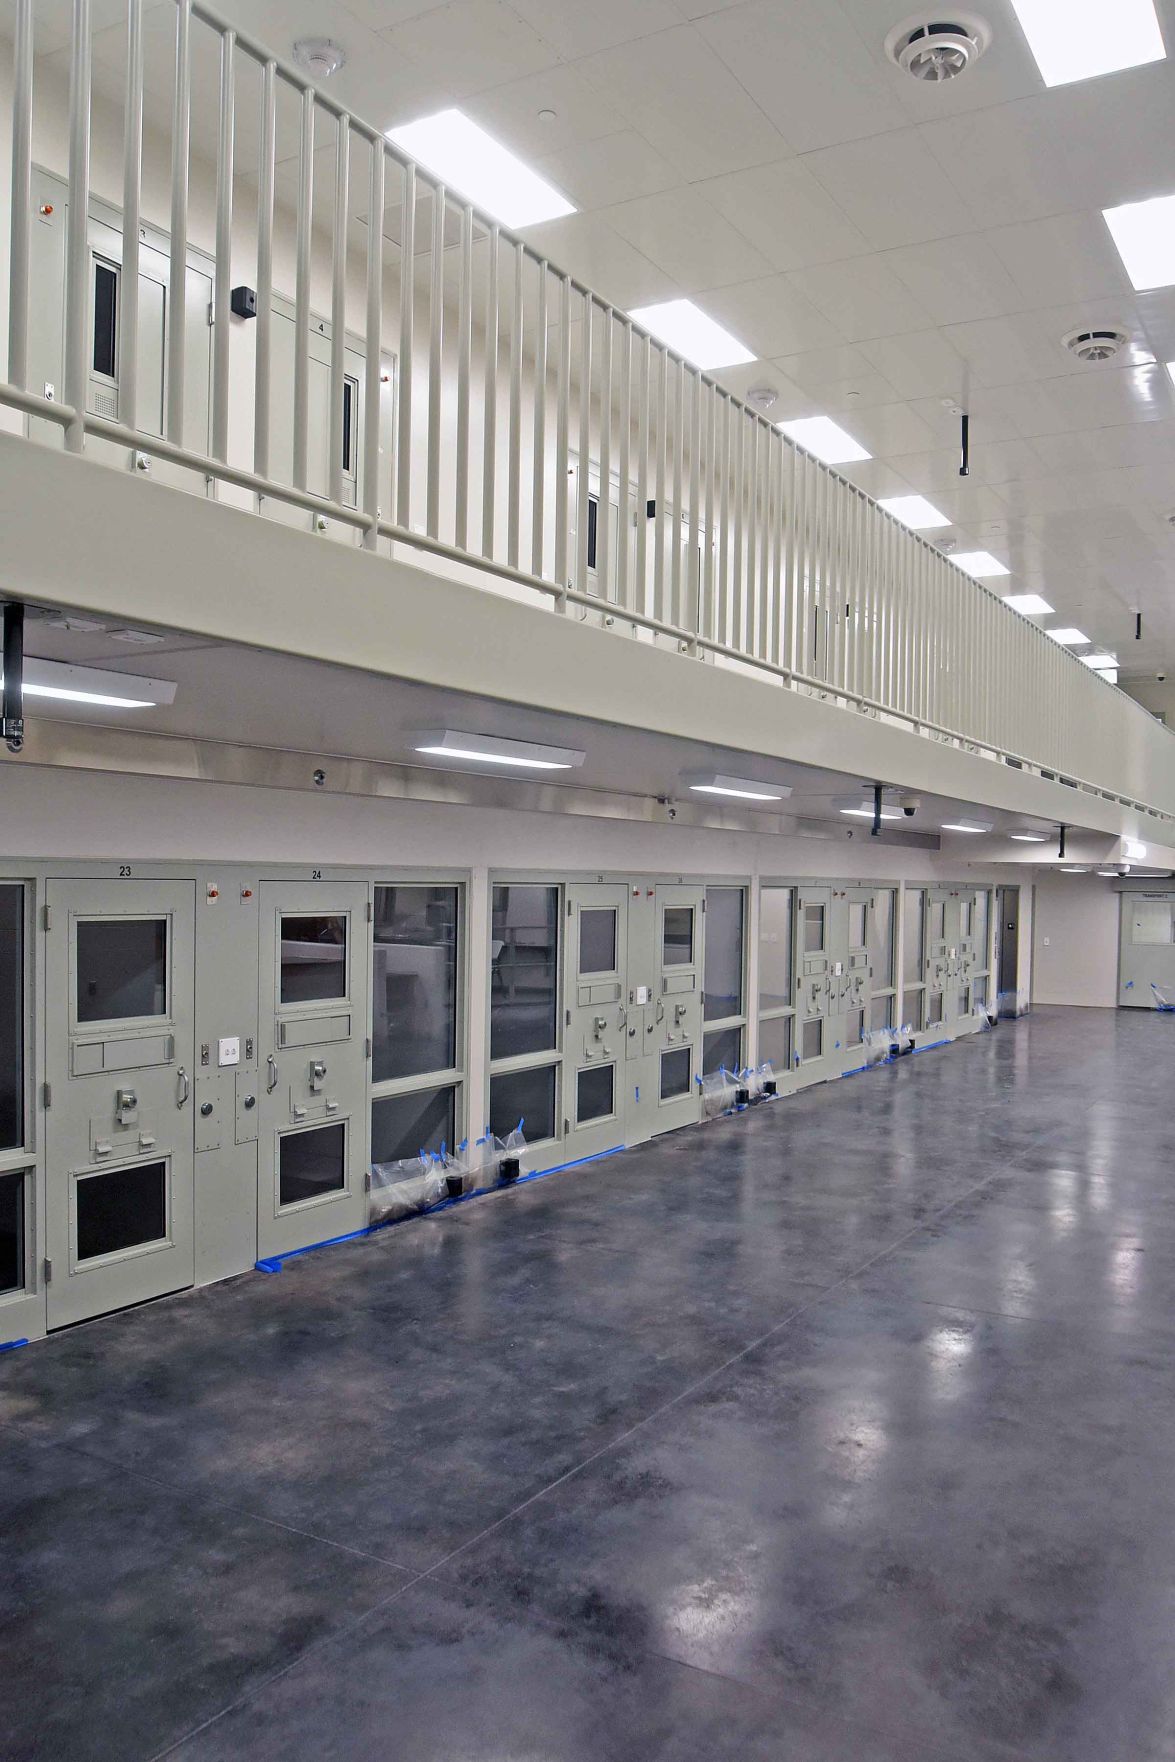 Burleigh Morton Detention Center soon to open Tribune Photo